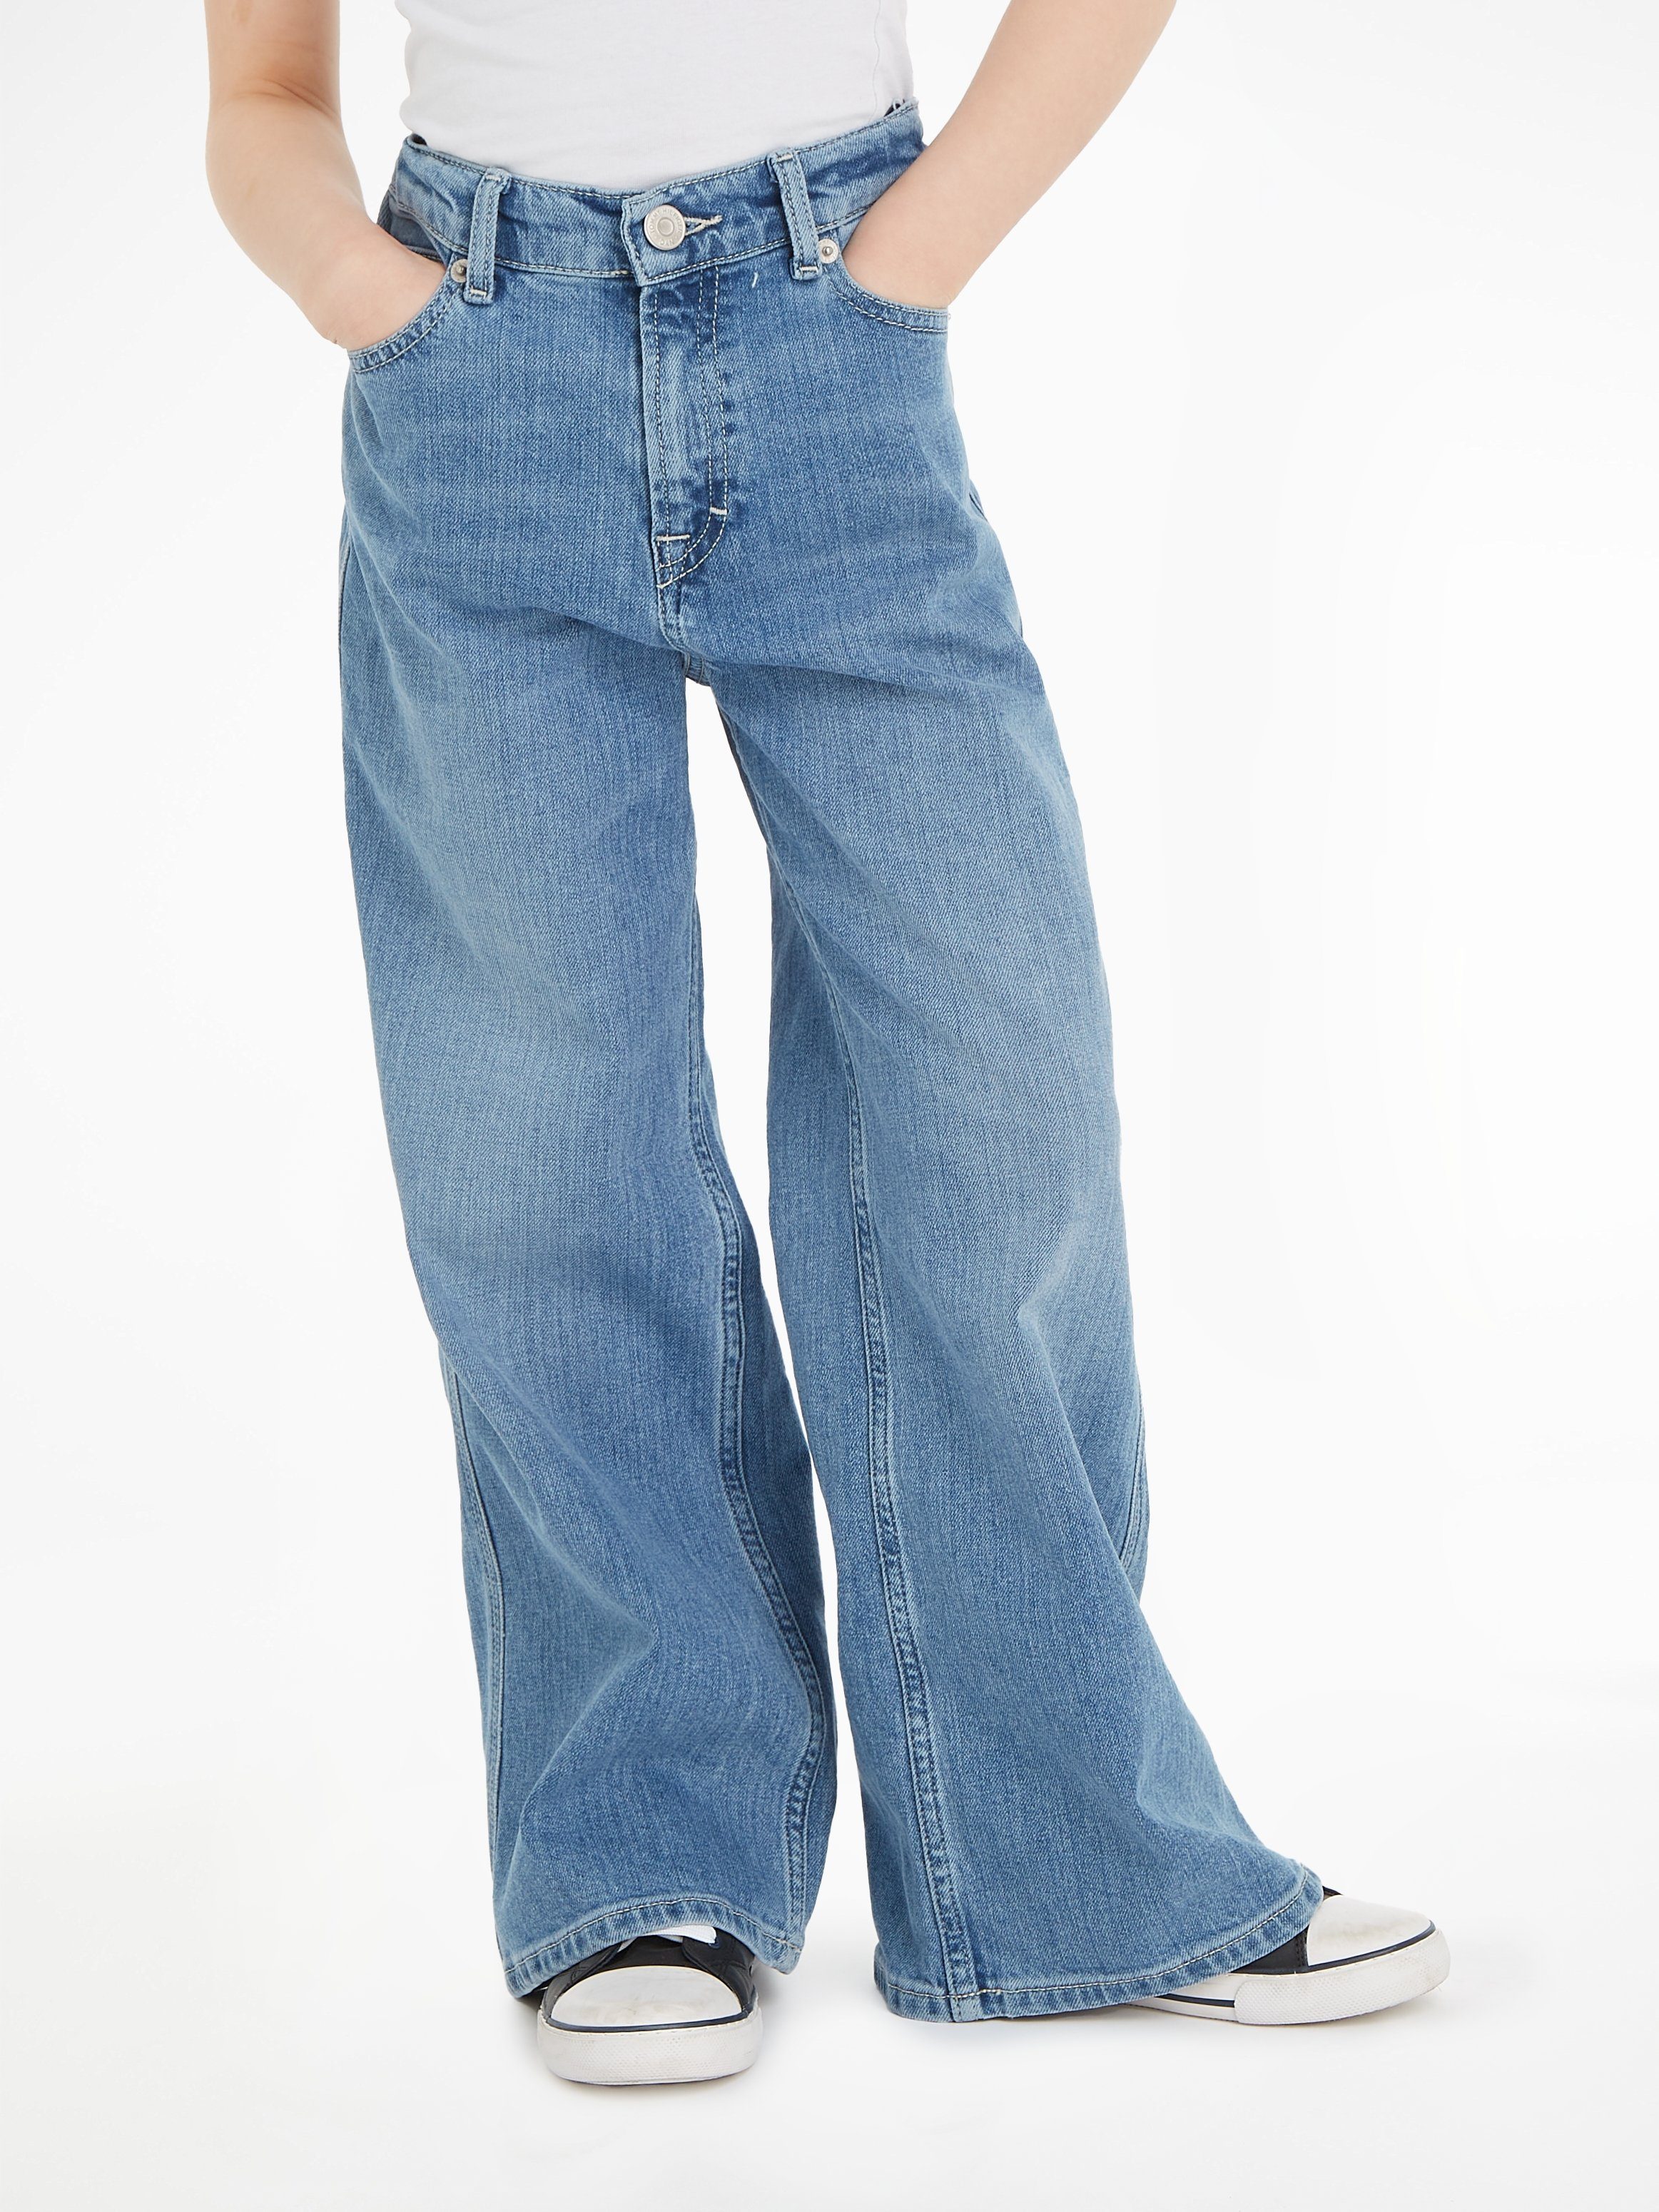 WASH Tommy MID MABEL Hilfiger Jeans im 5-Pocket-Style Weite